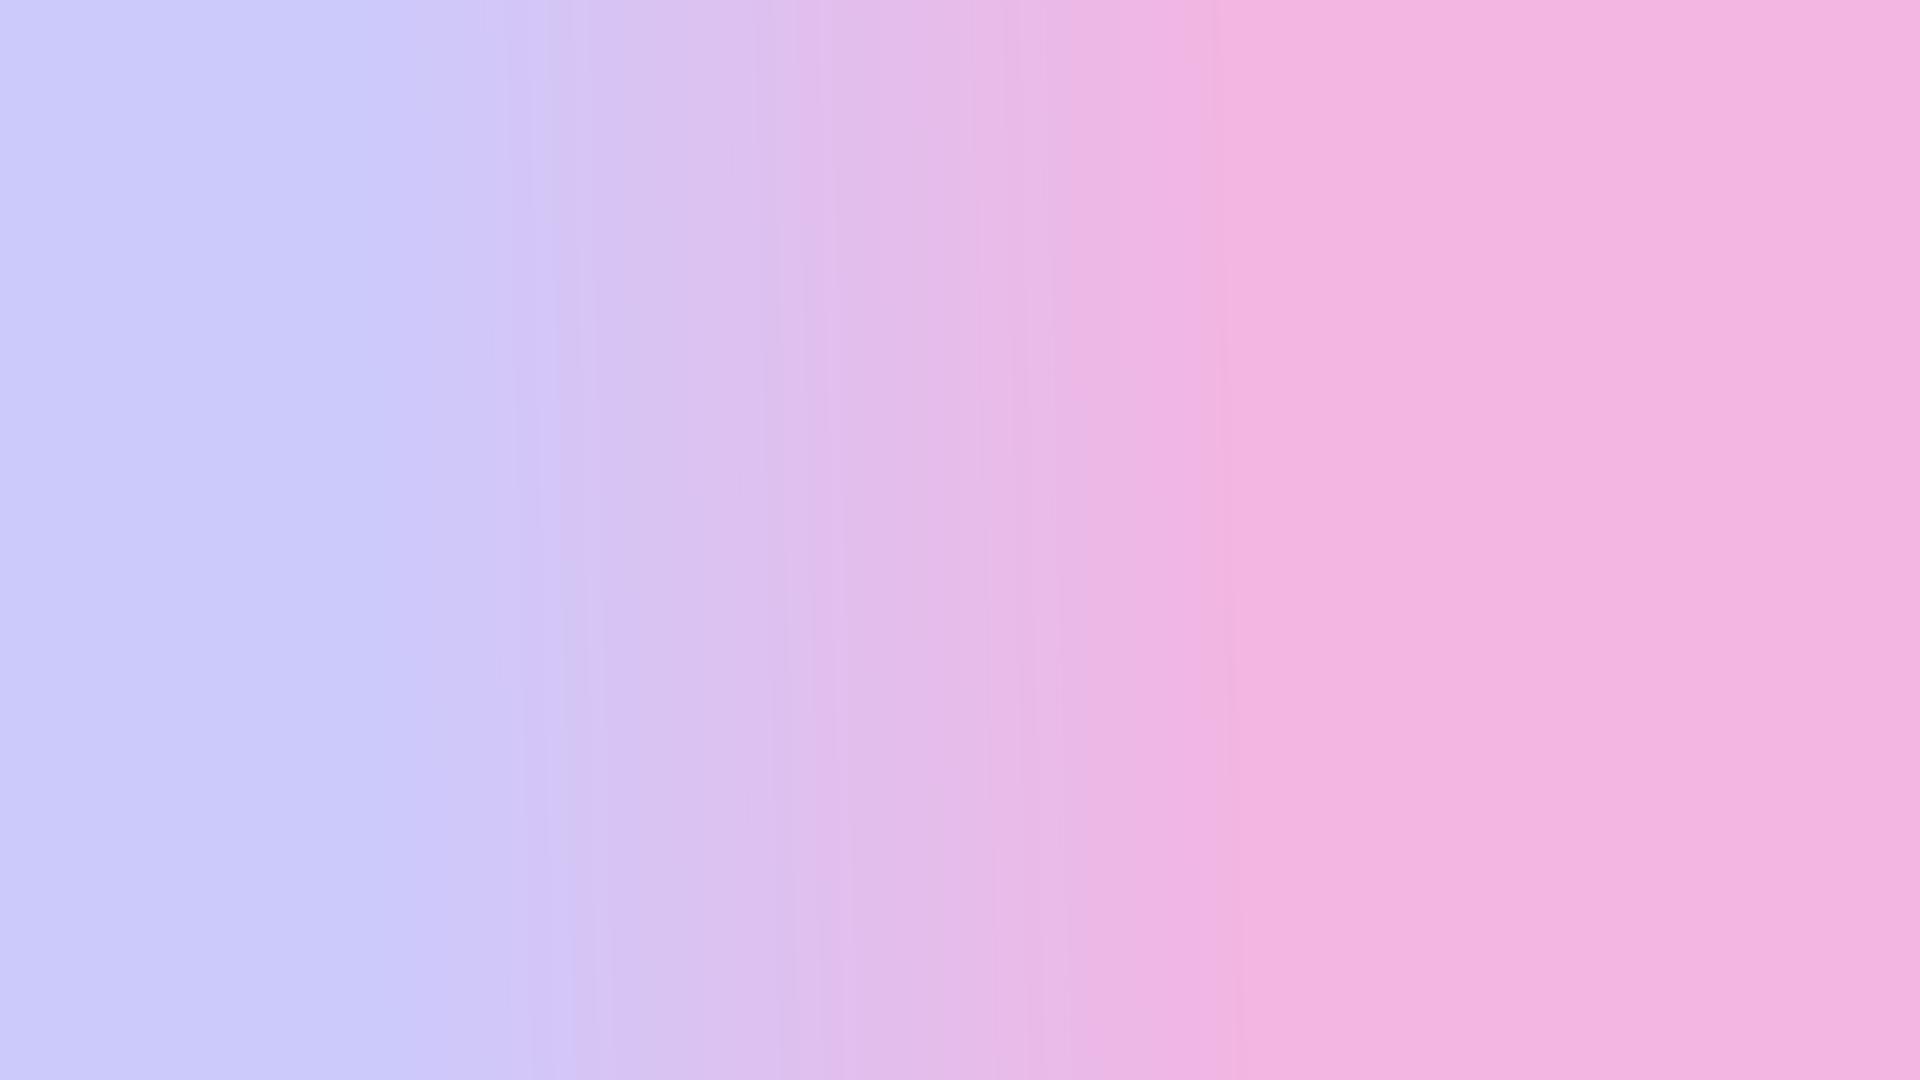 Lavender-Pink Gradient